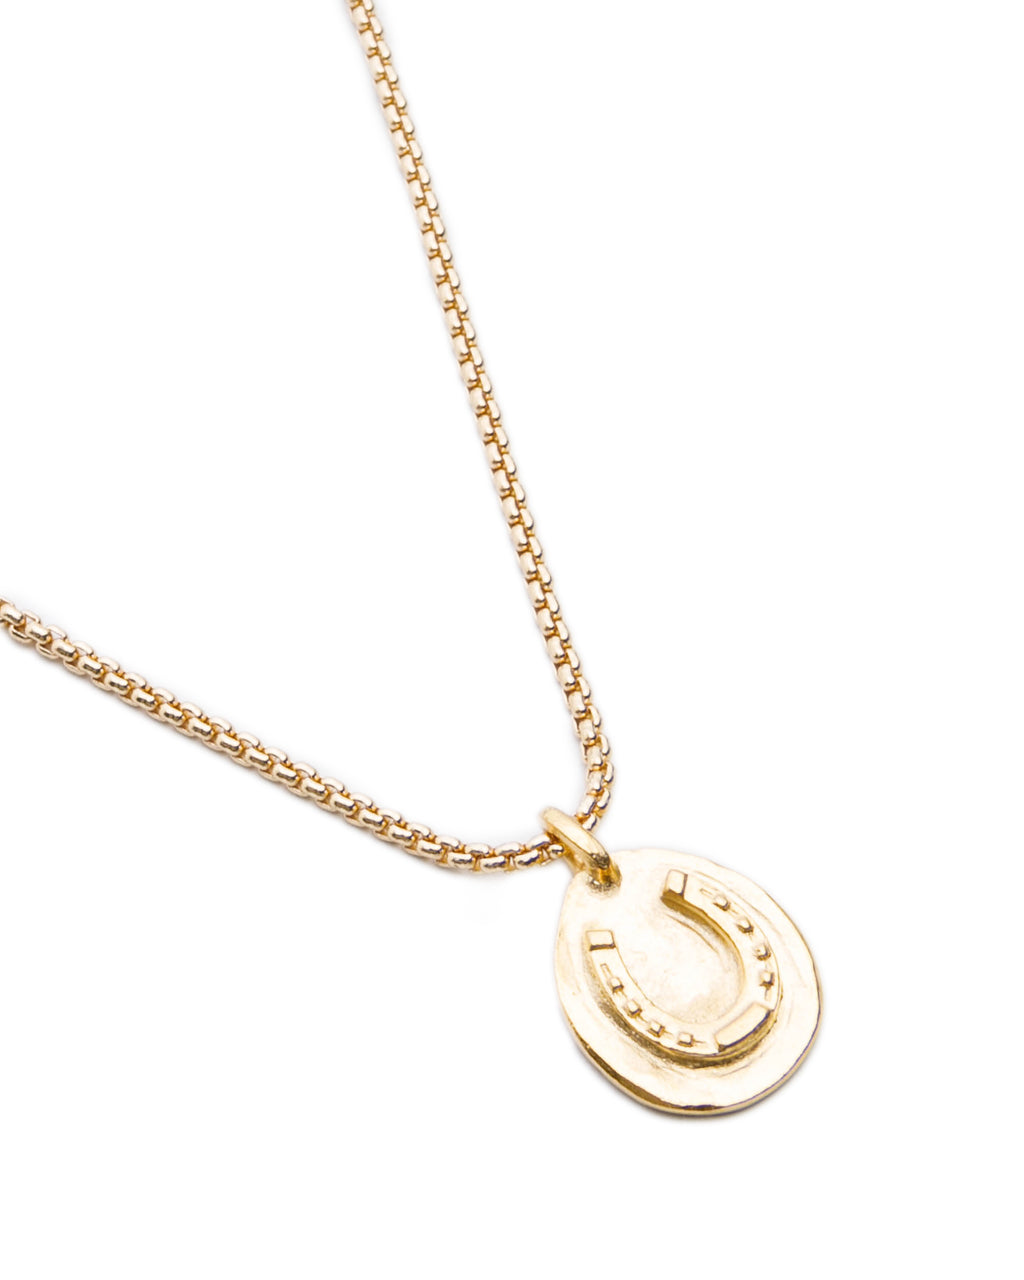 Golden “Lucky” Horseshoe Necklace